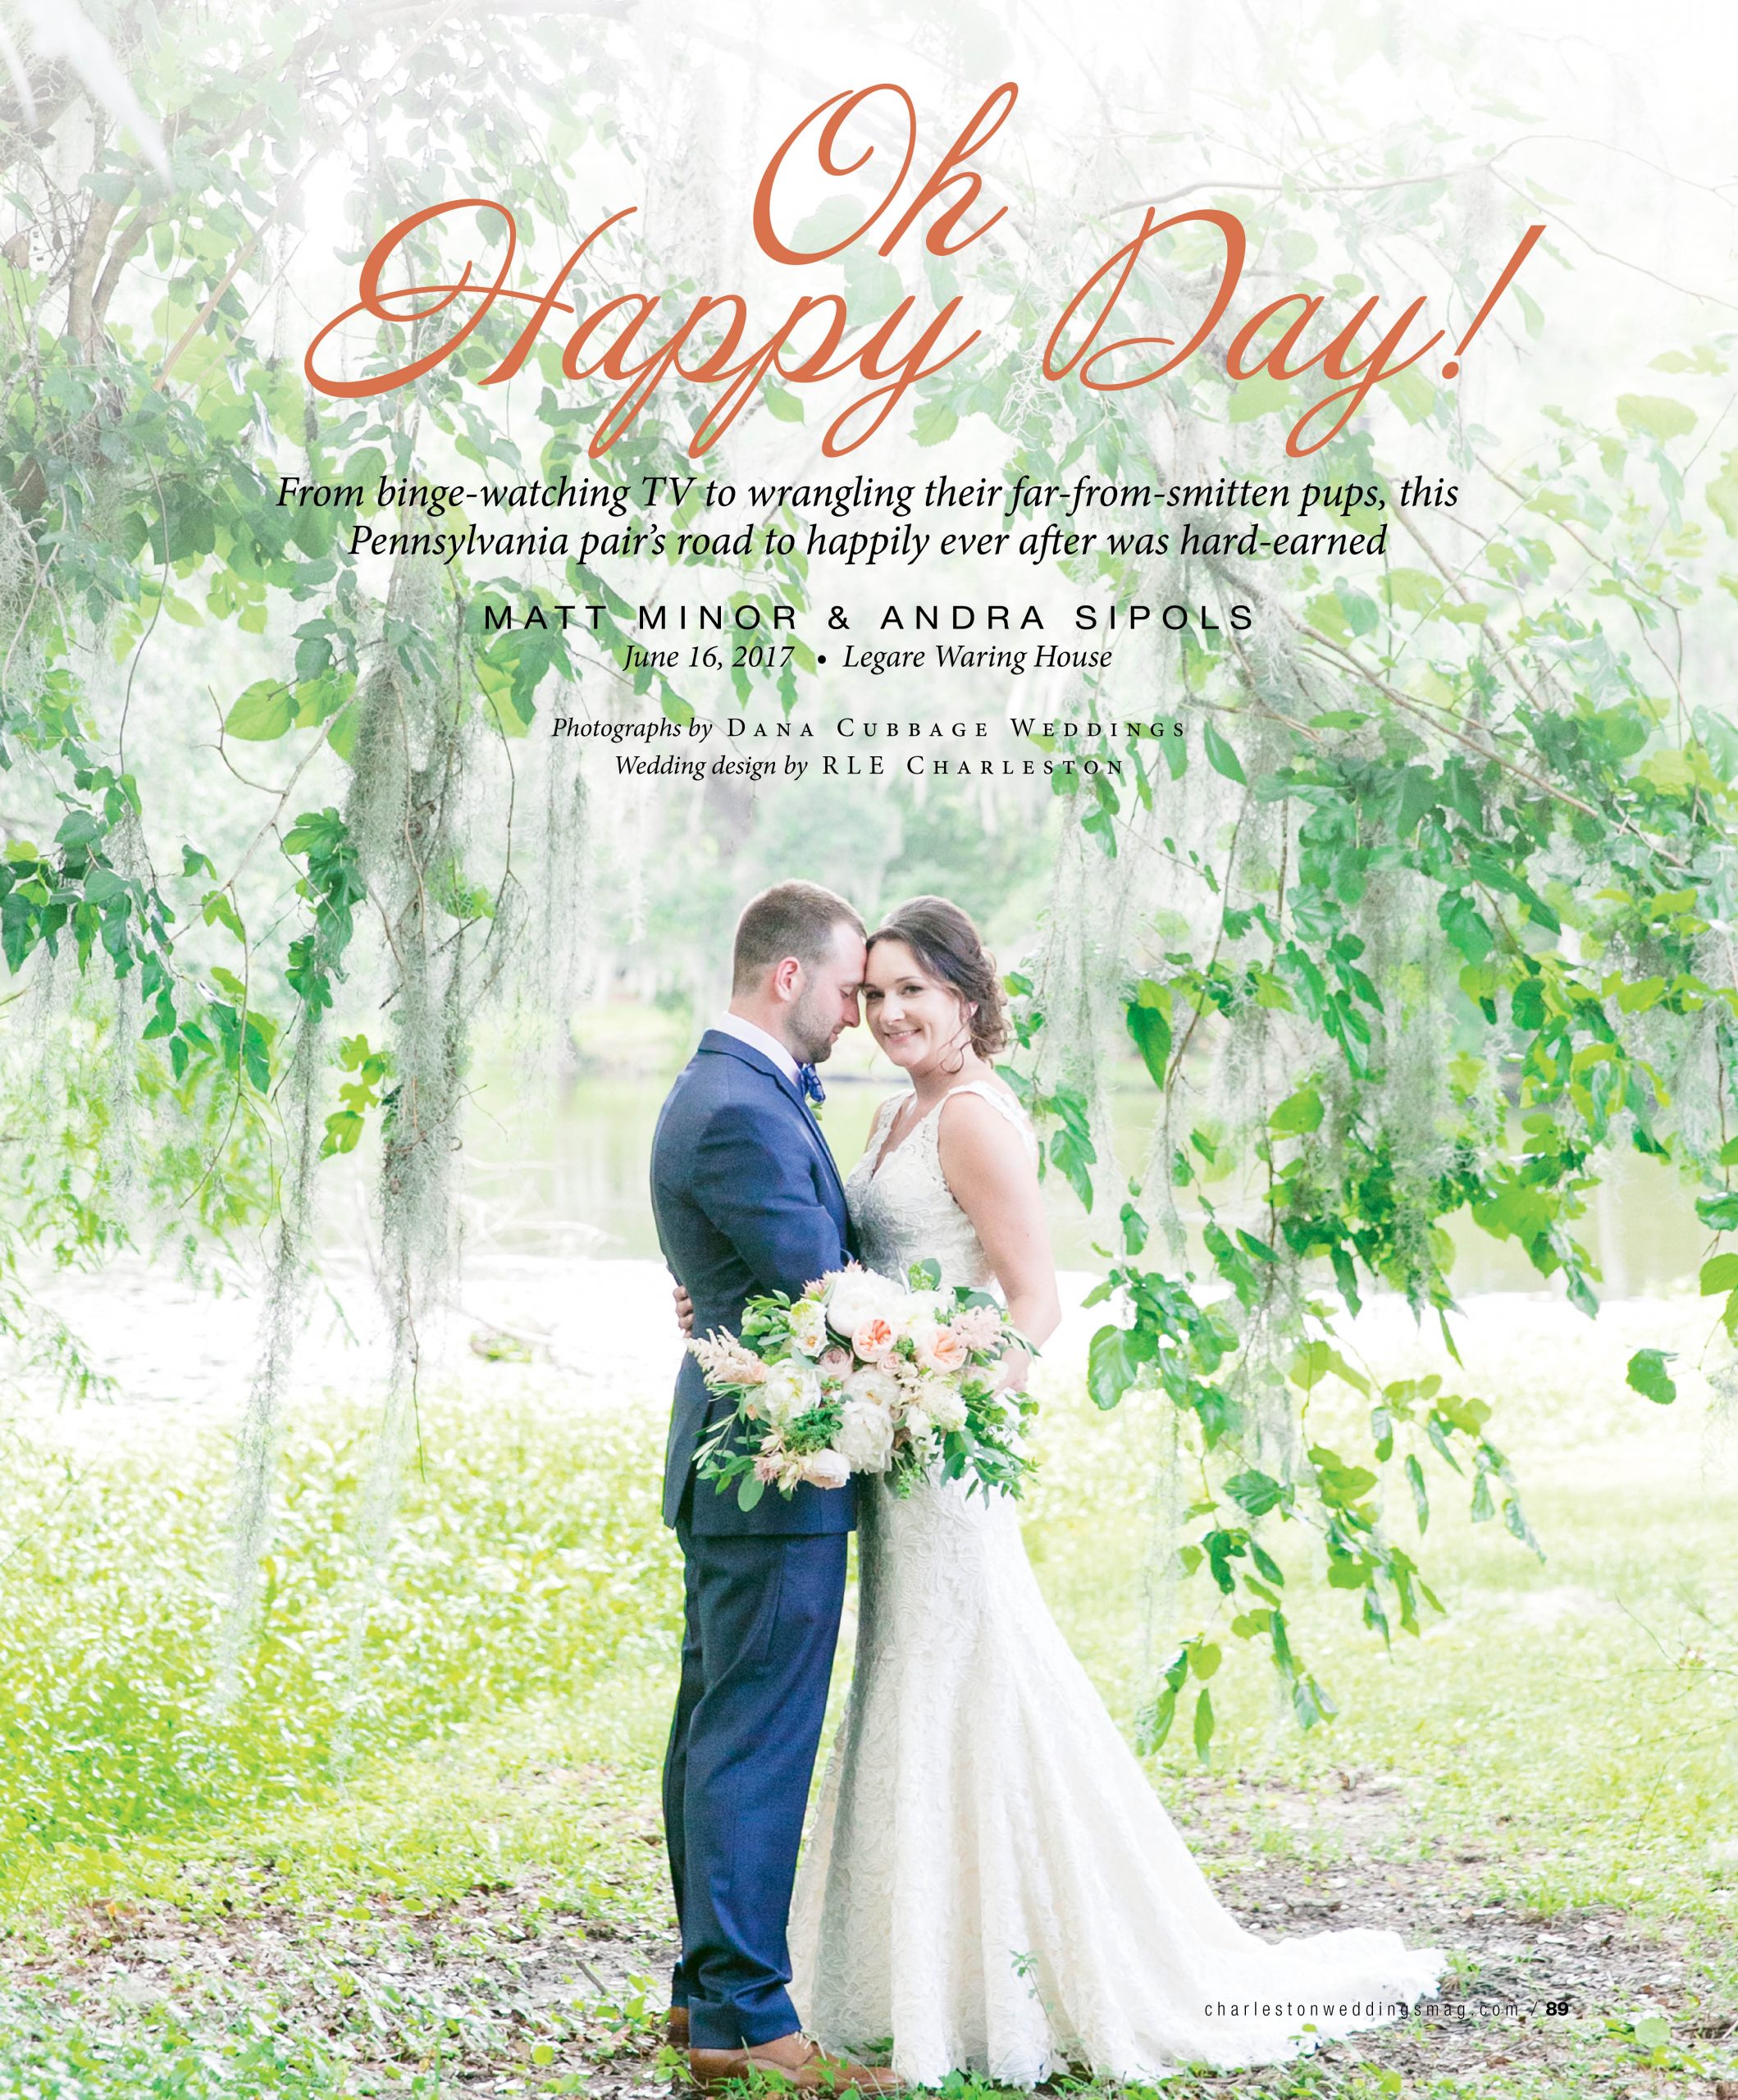 charleston weddings magazine legare waring house wedding dana cubbage